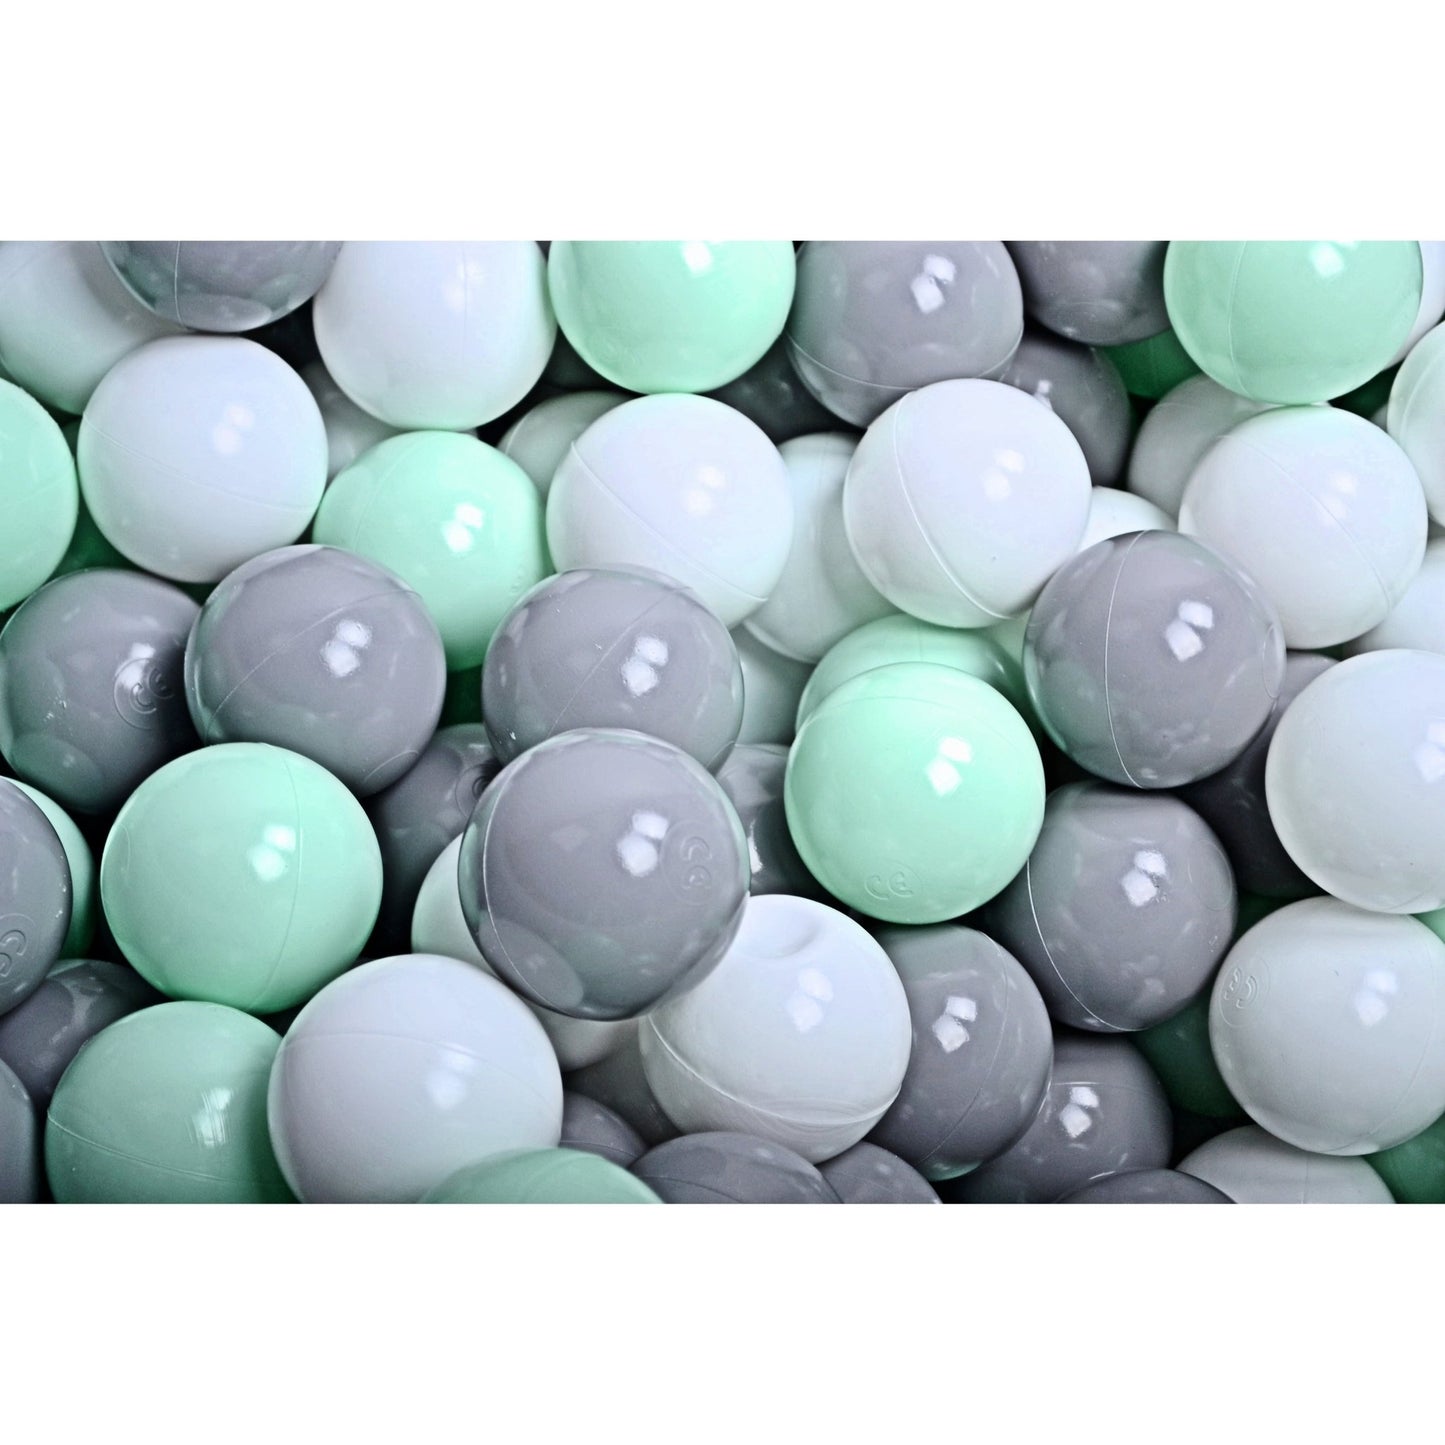 Ecru Velvet Round Foam Ball Pit - Select Your Own Balls